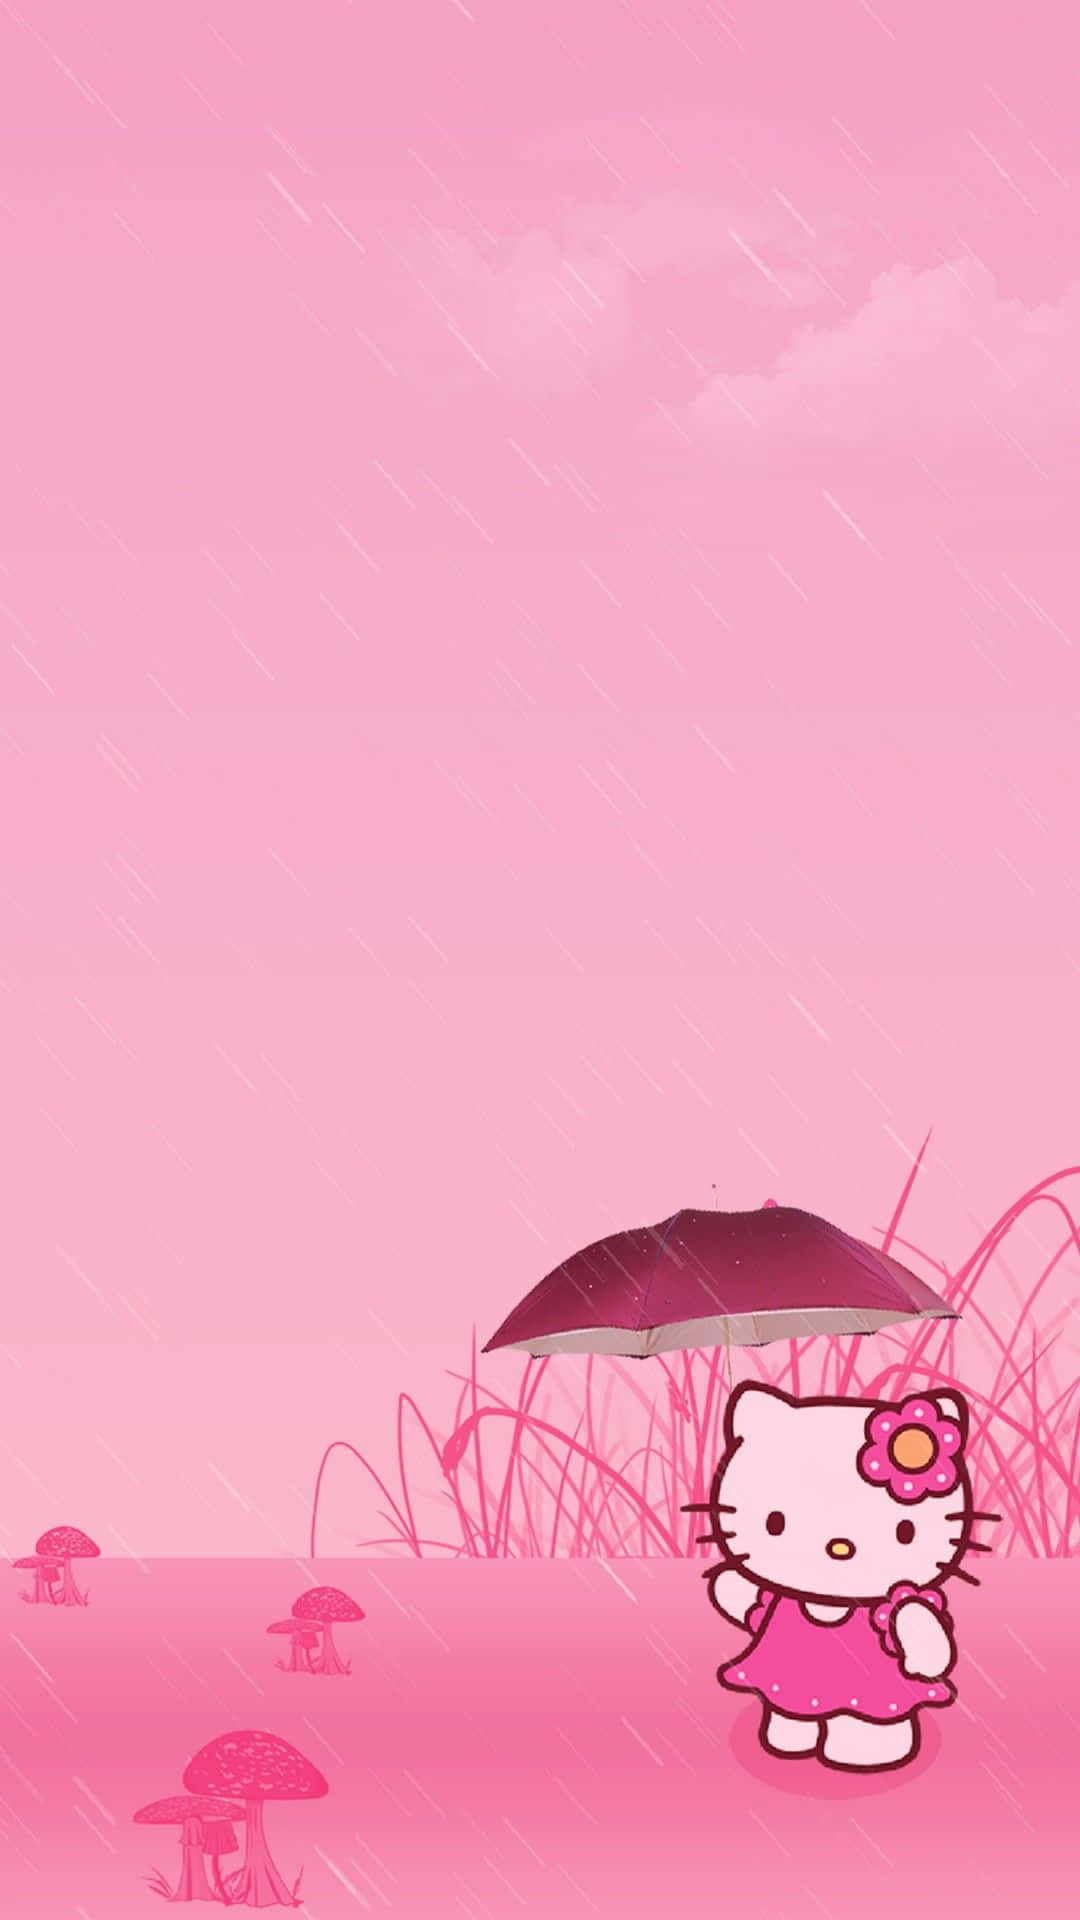 Hello Kitty In The Rain With An Umbrella Wallpaper